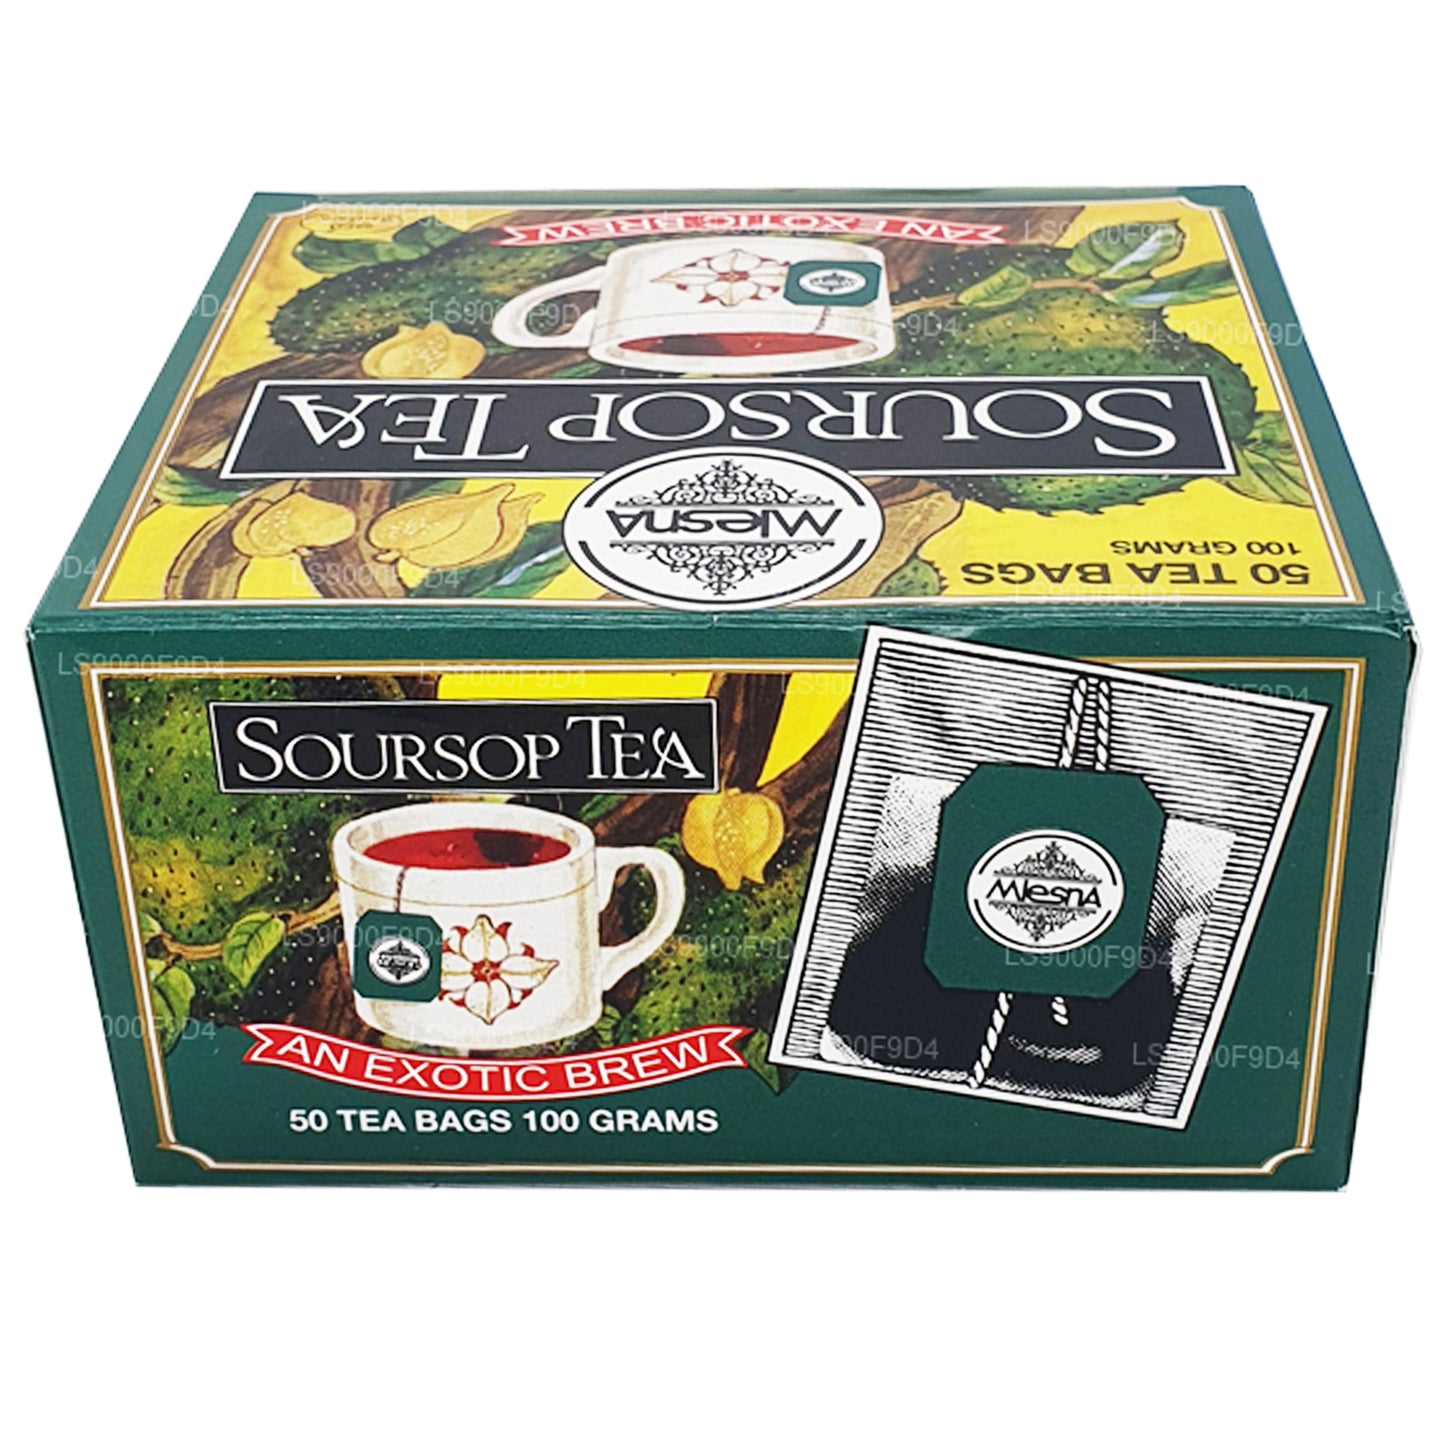 Mlesna Soursop Tea 'Exotional Brew' 50g 茶包 (100g)